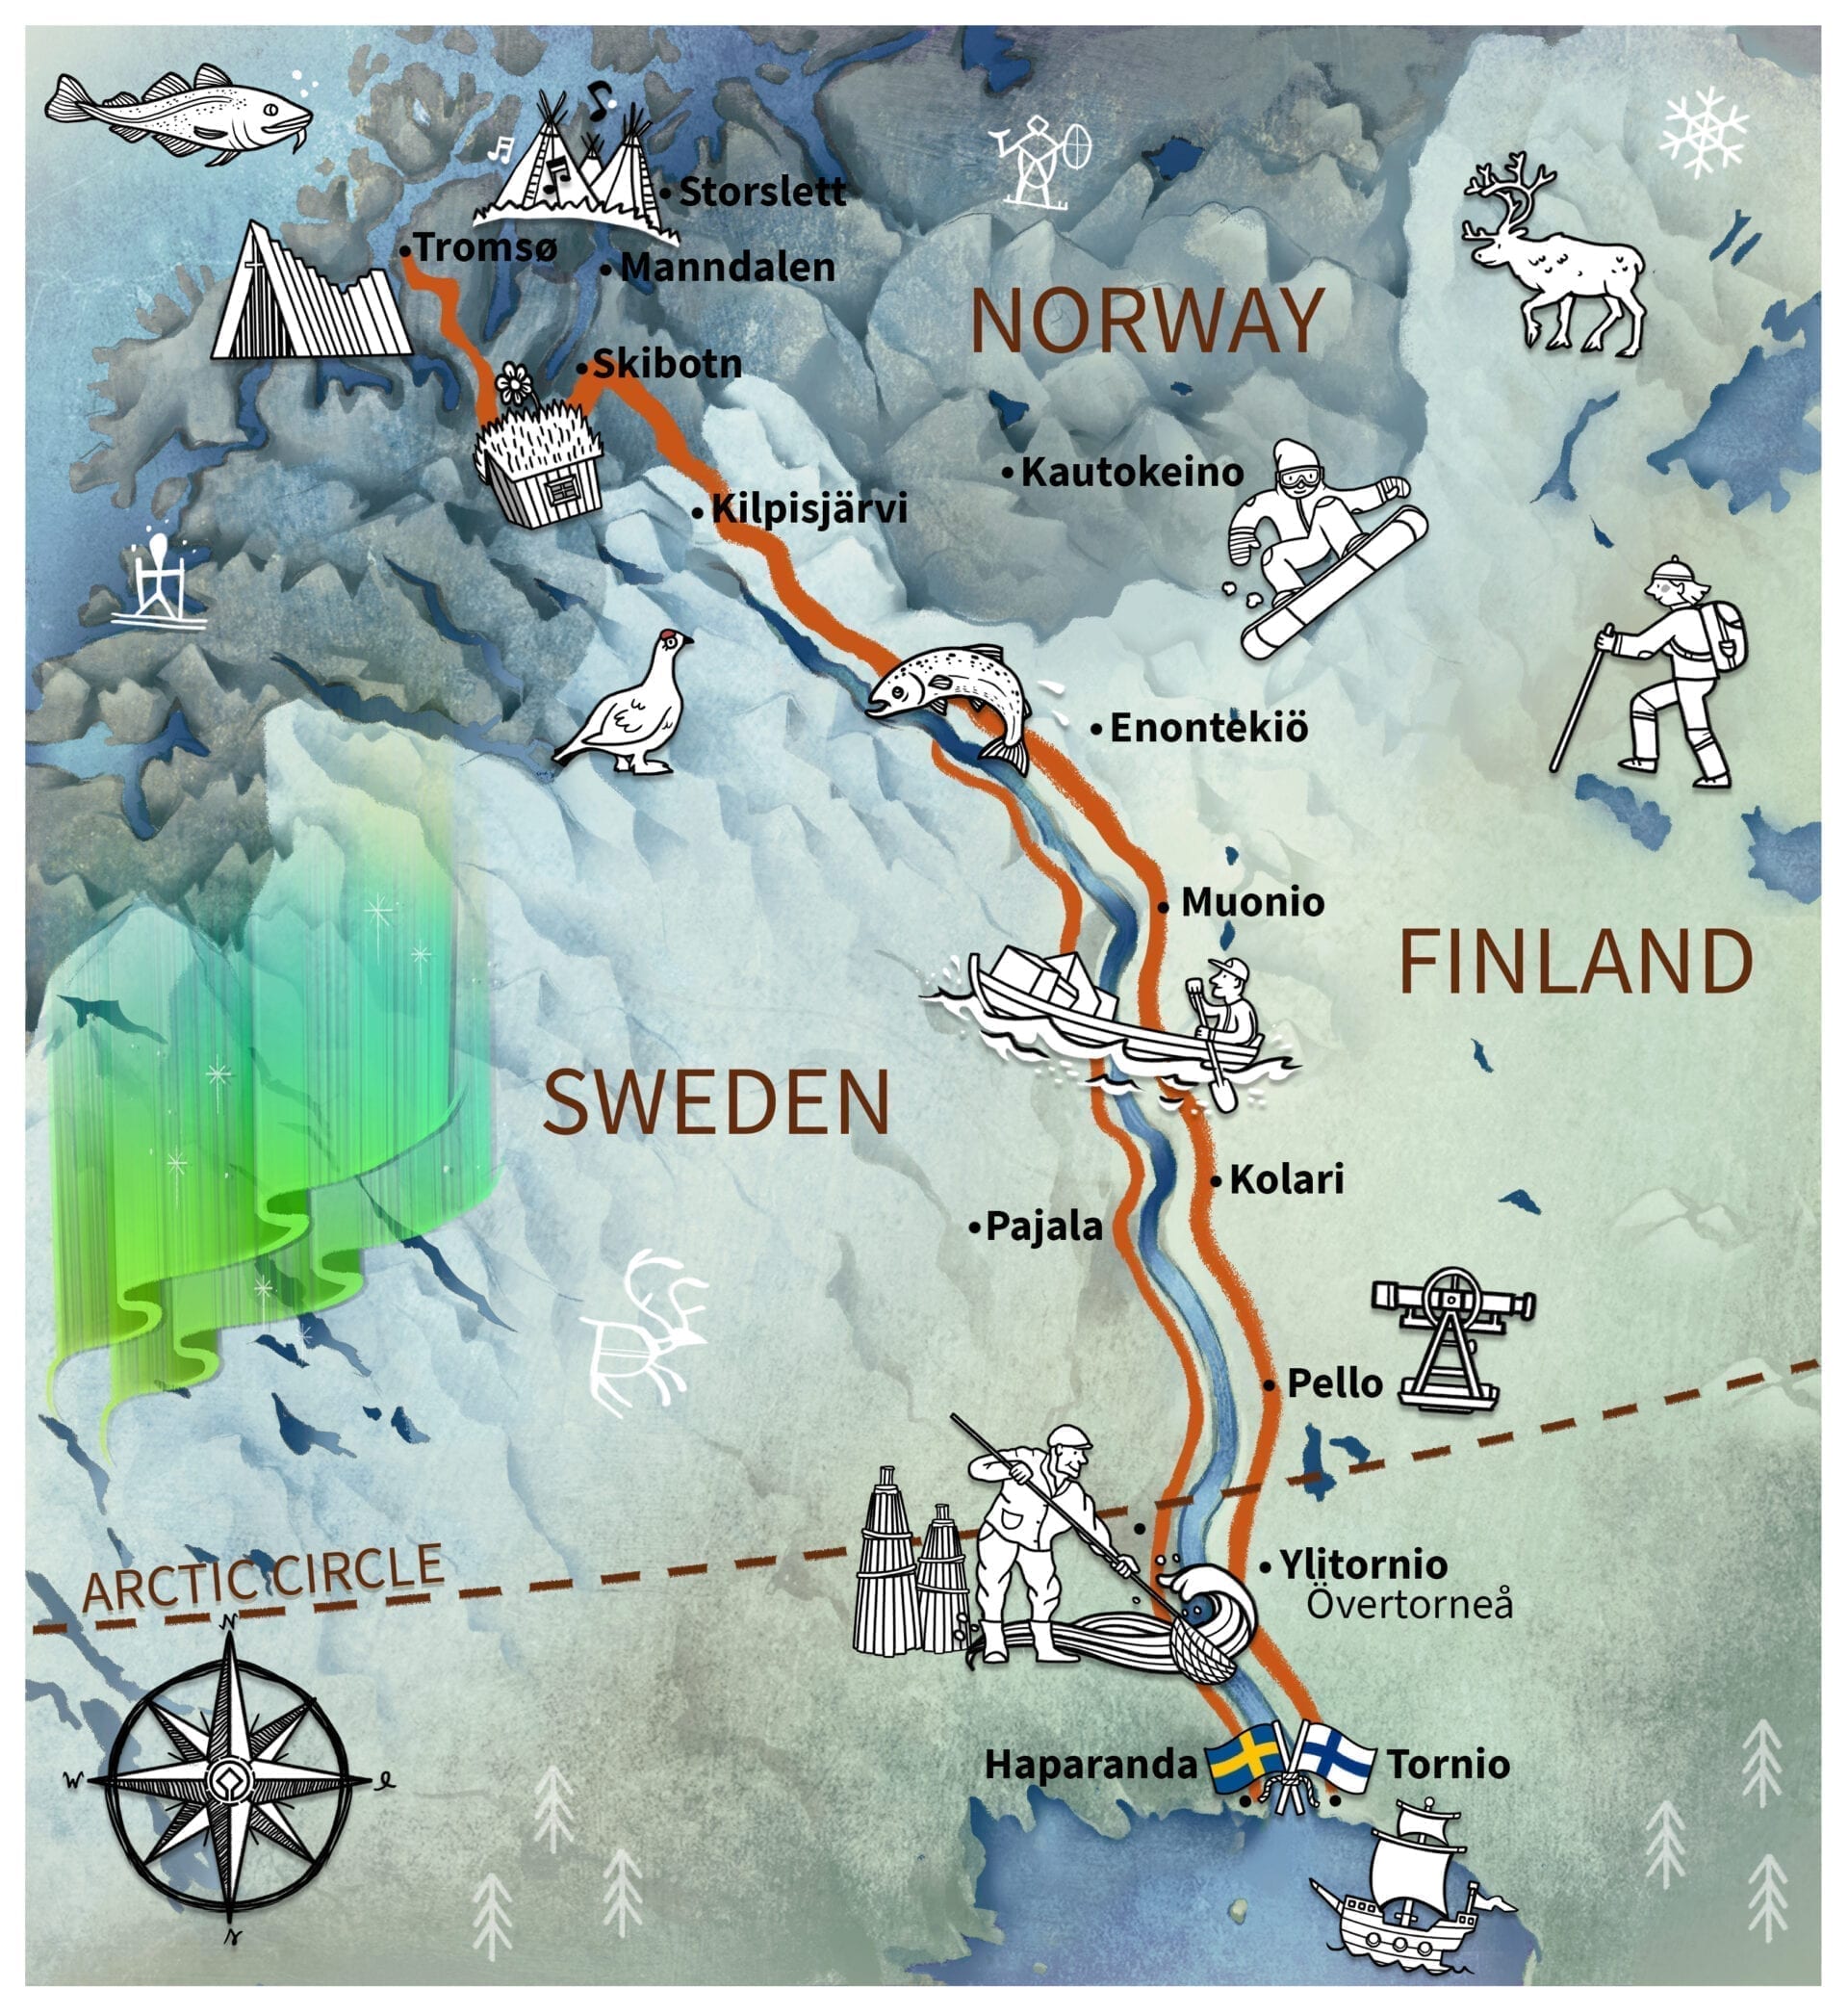 Northern Lights Map